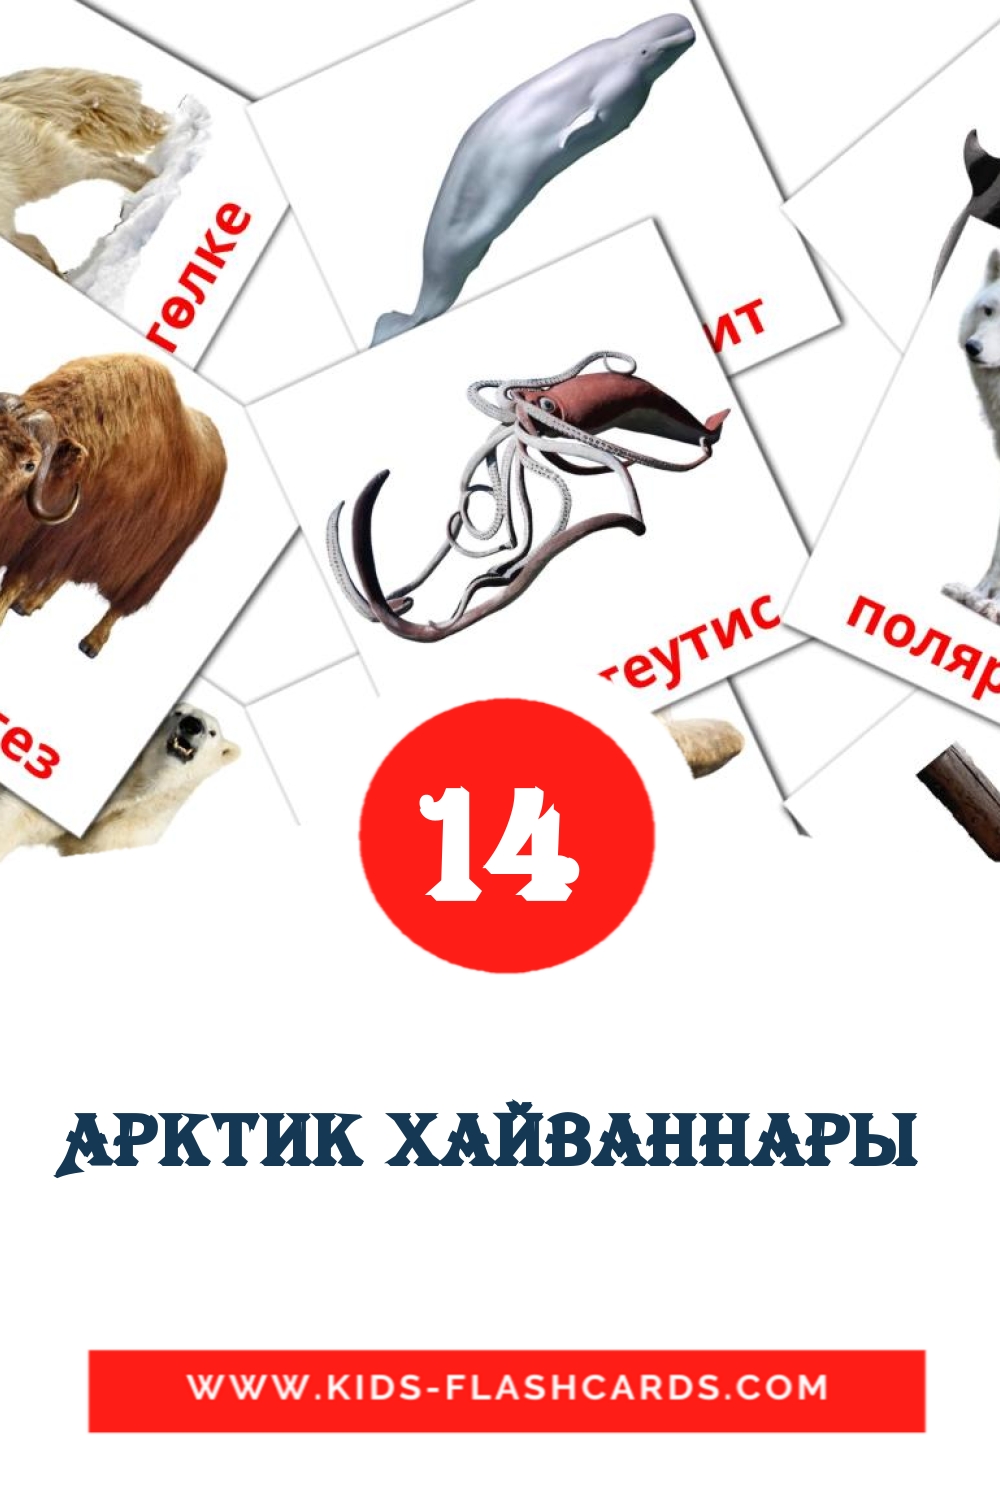 14 carte illustrate di Арктик хайваннары  per la scuola materna in tatar